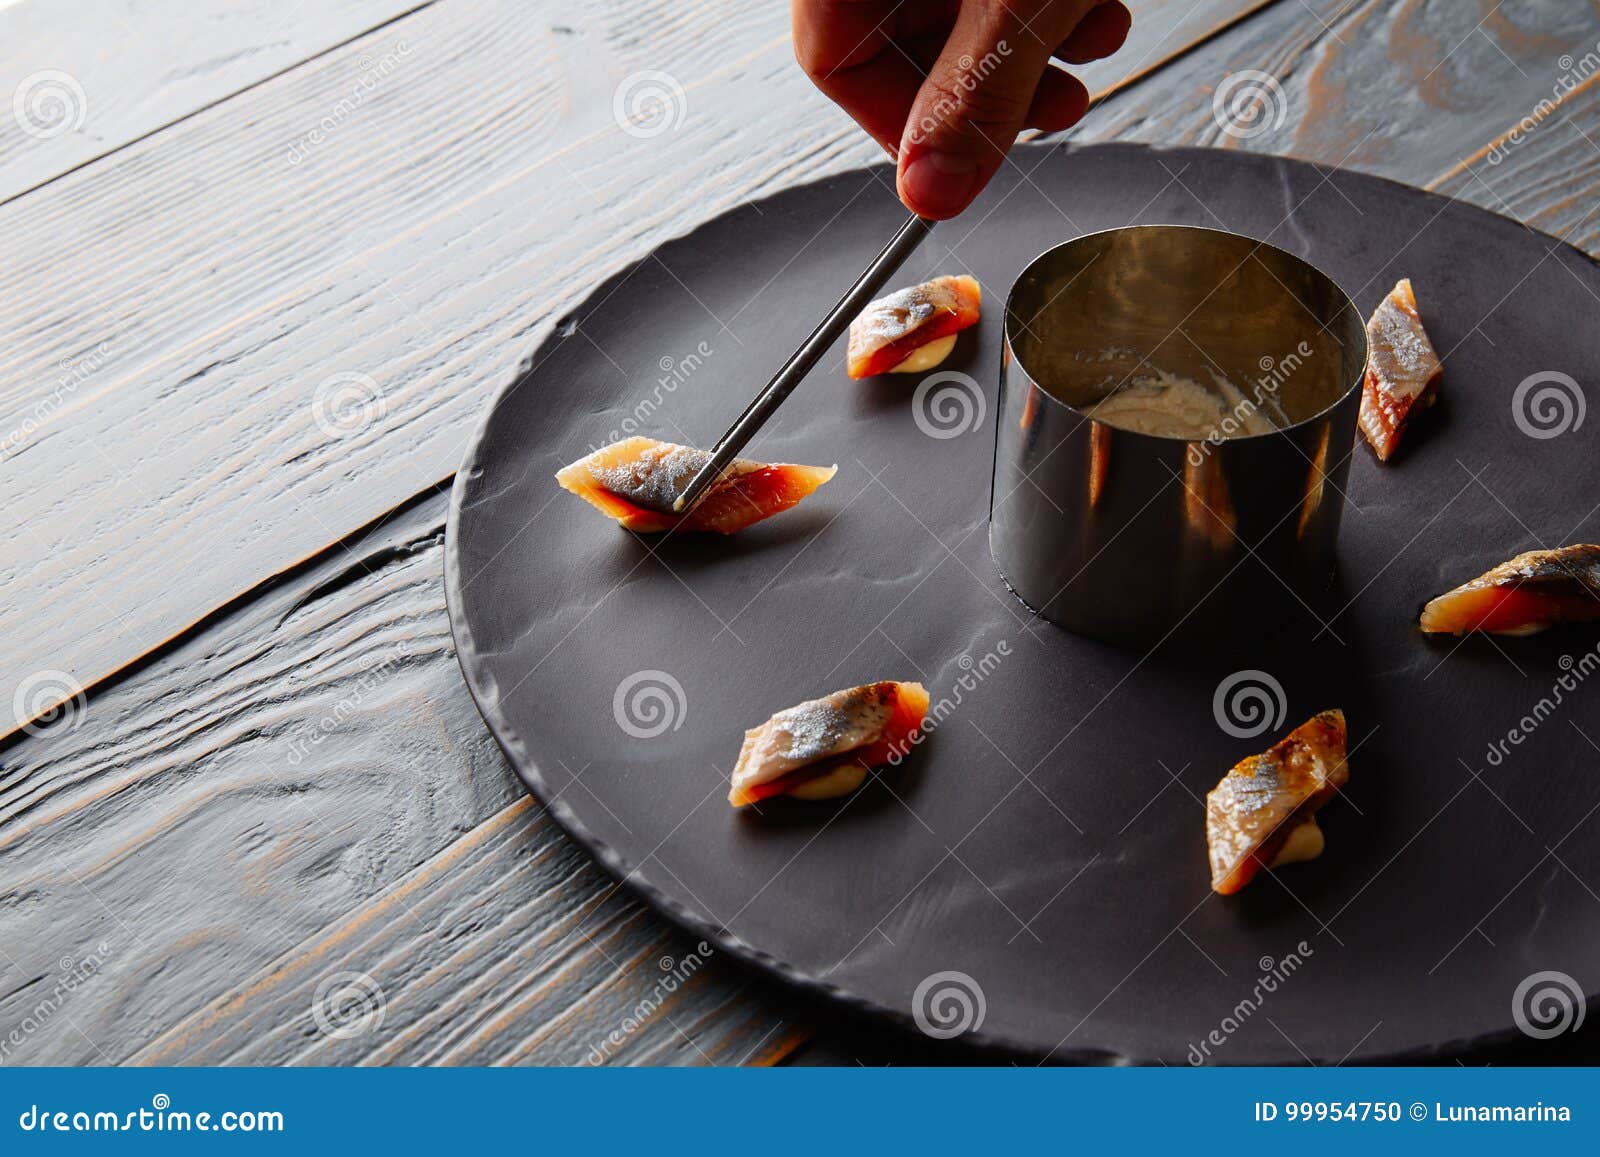 bota sardine preparation with chef hand